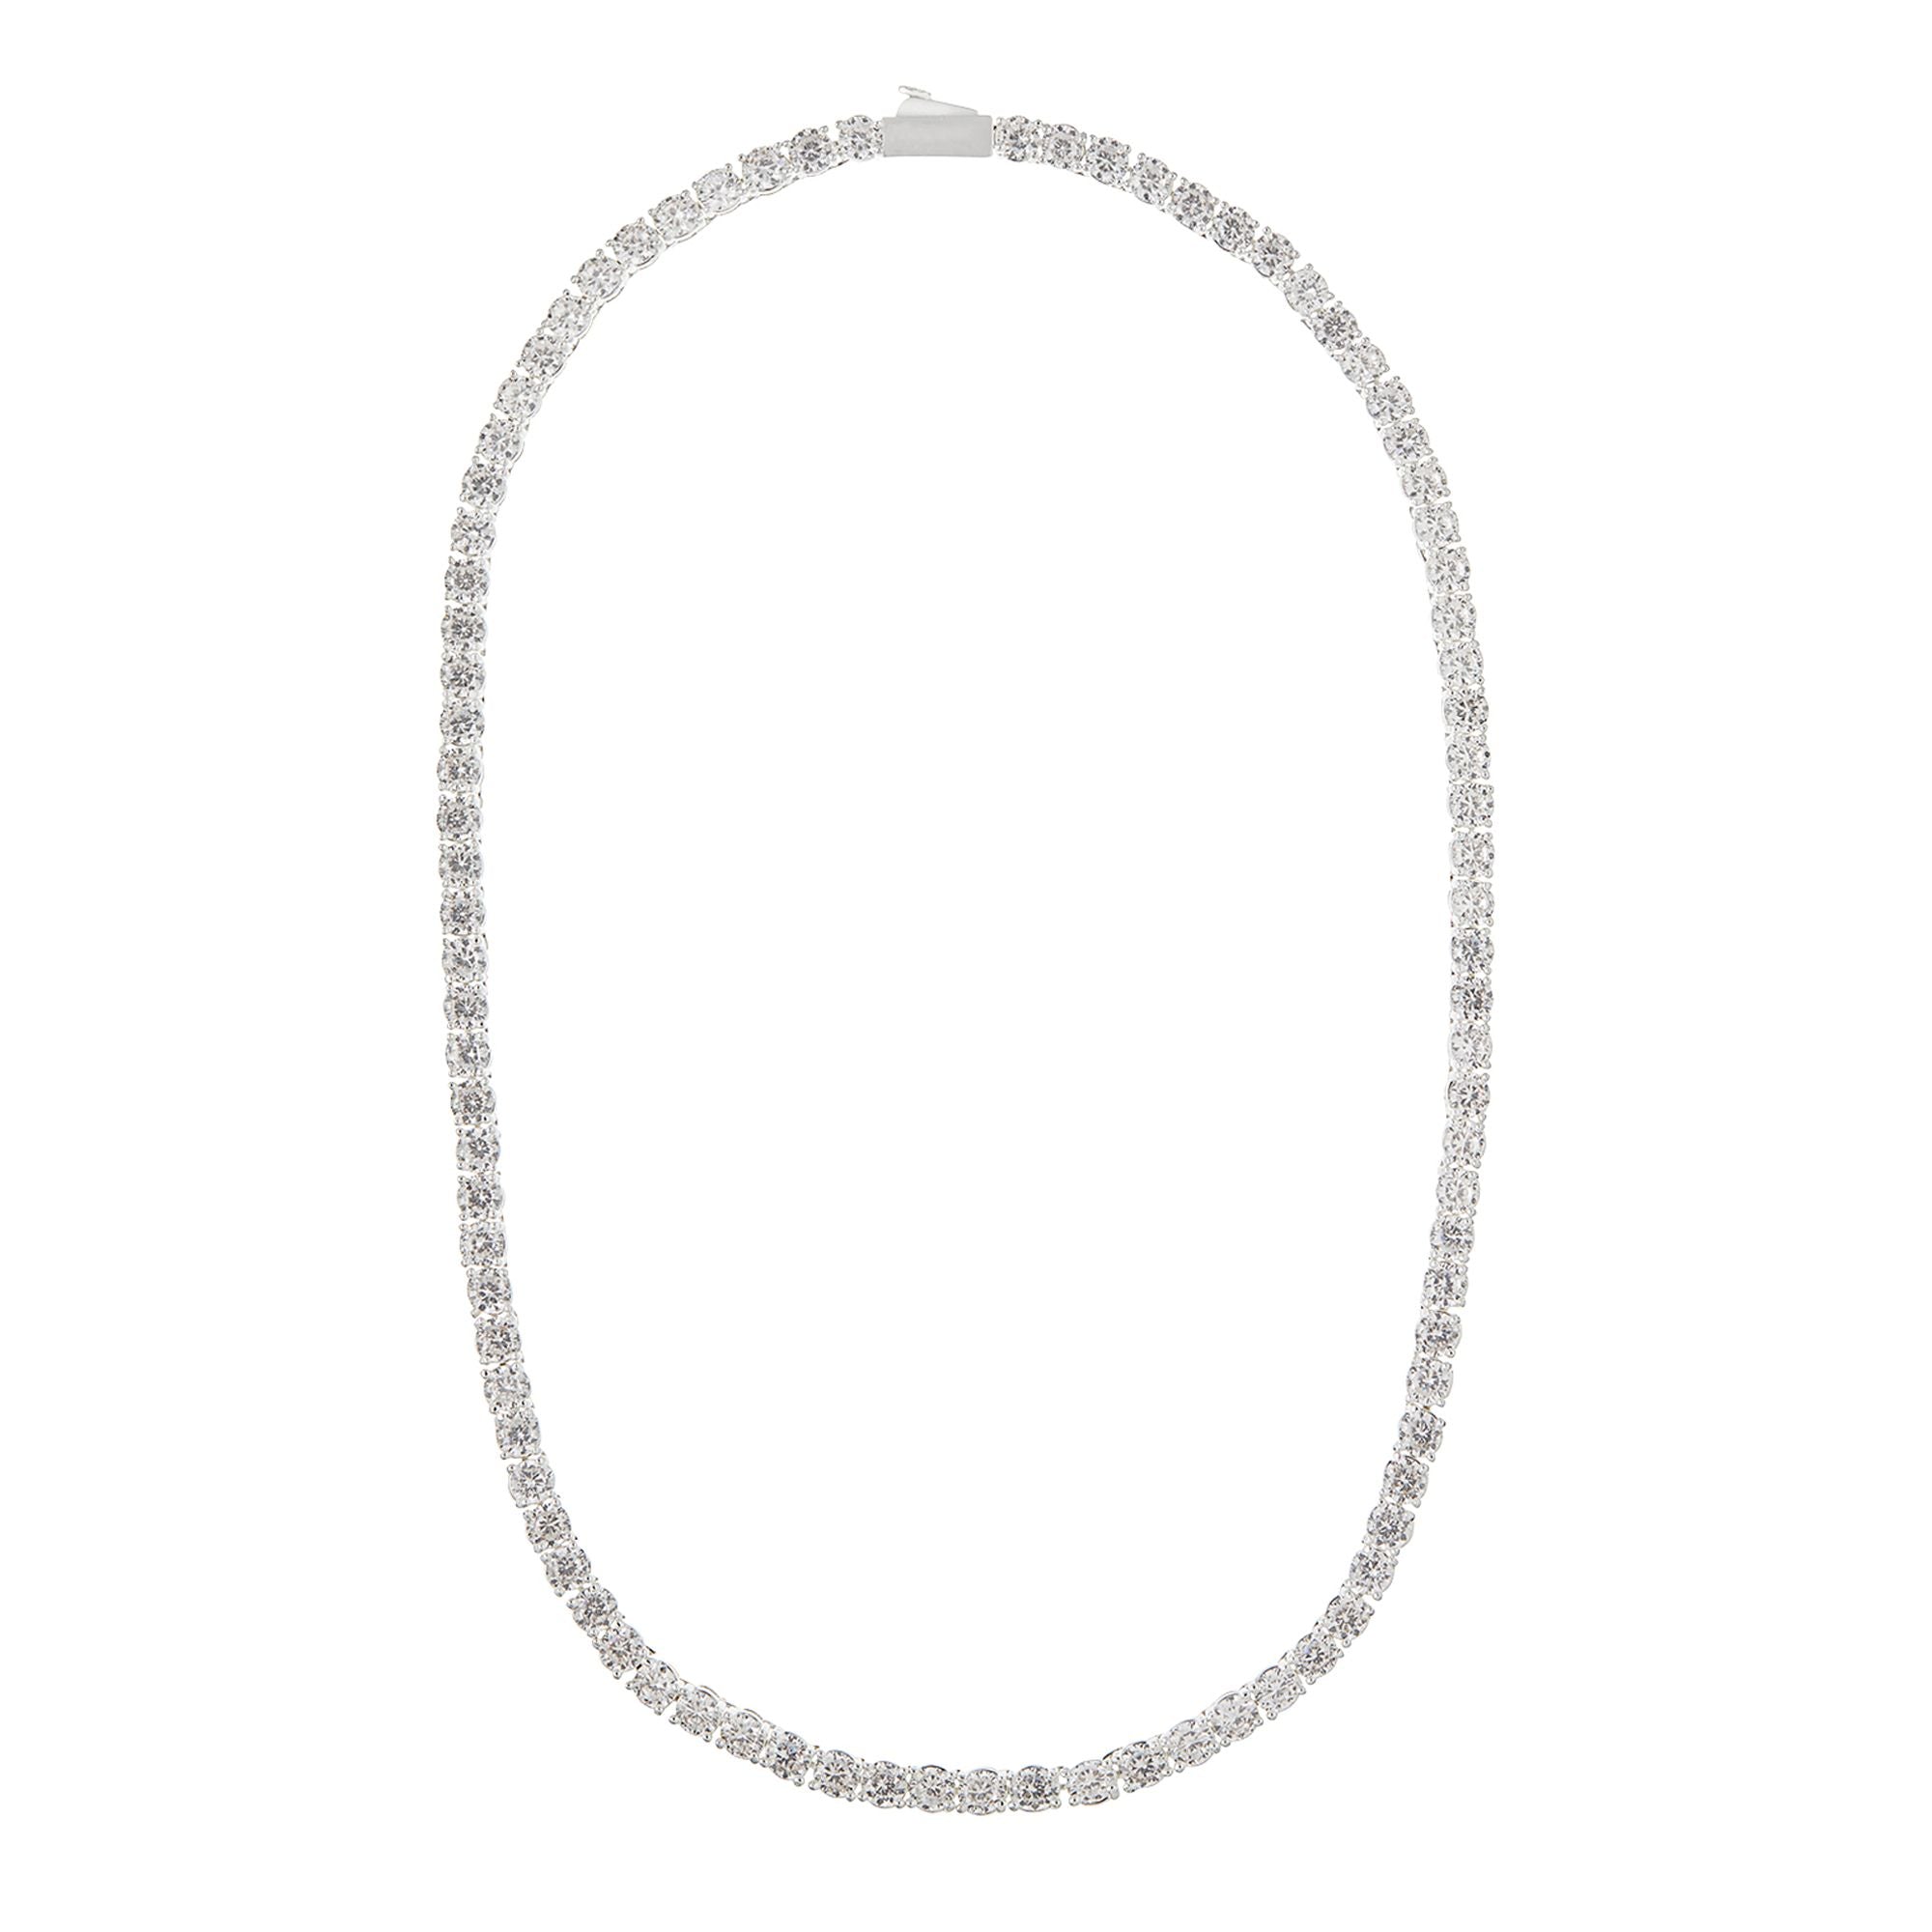 Tennis Necklace Silver